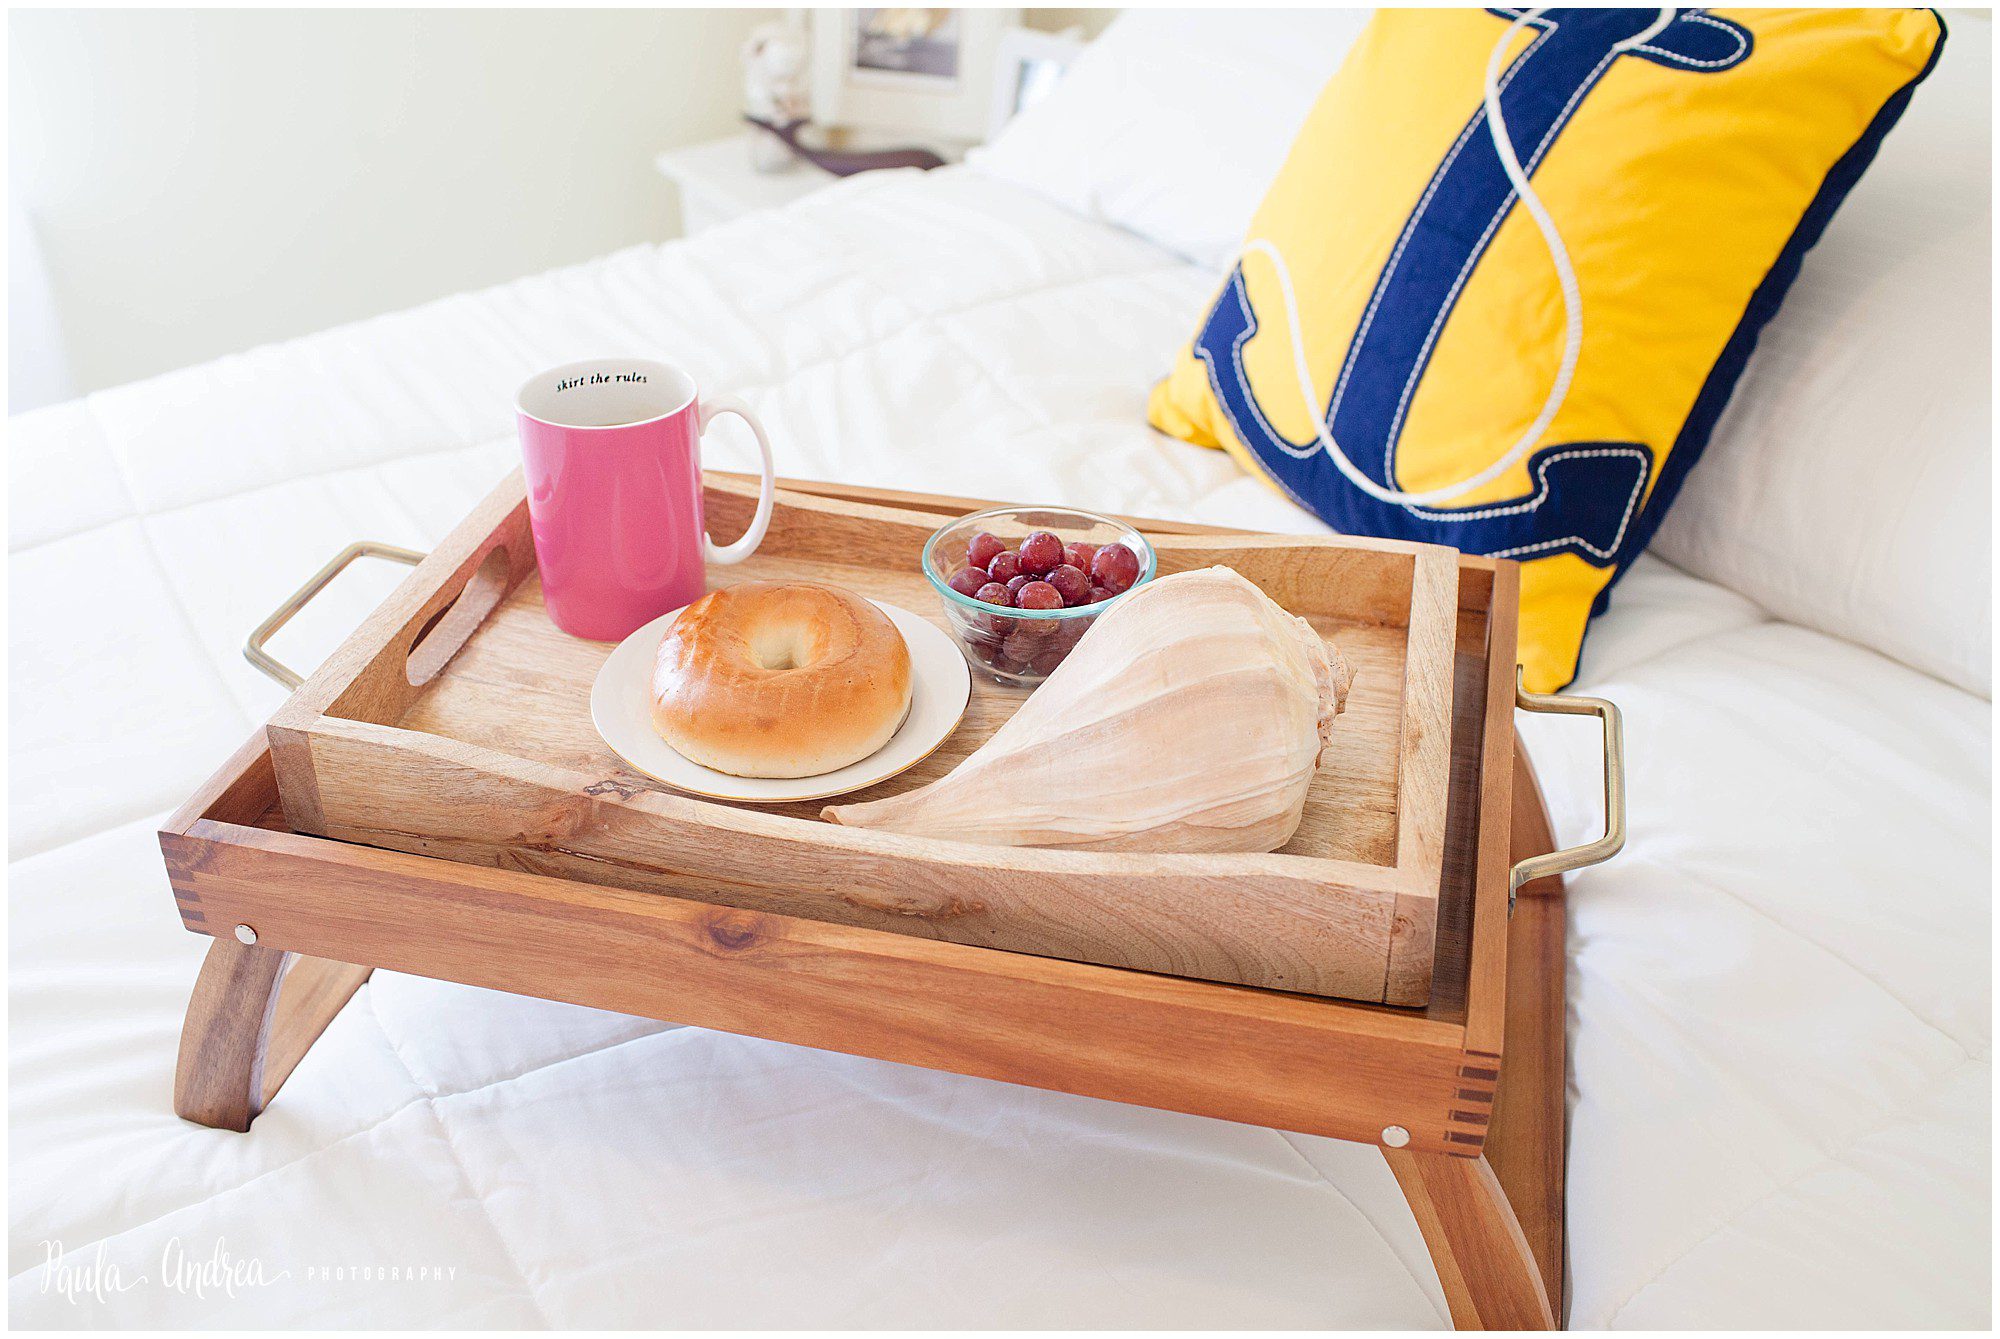 bed and breakfast nautical, breakfast tray, breakfast in bed